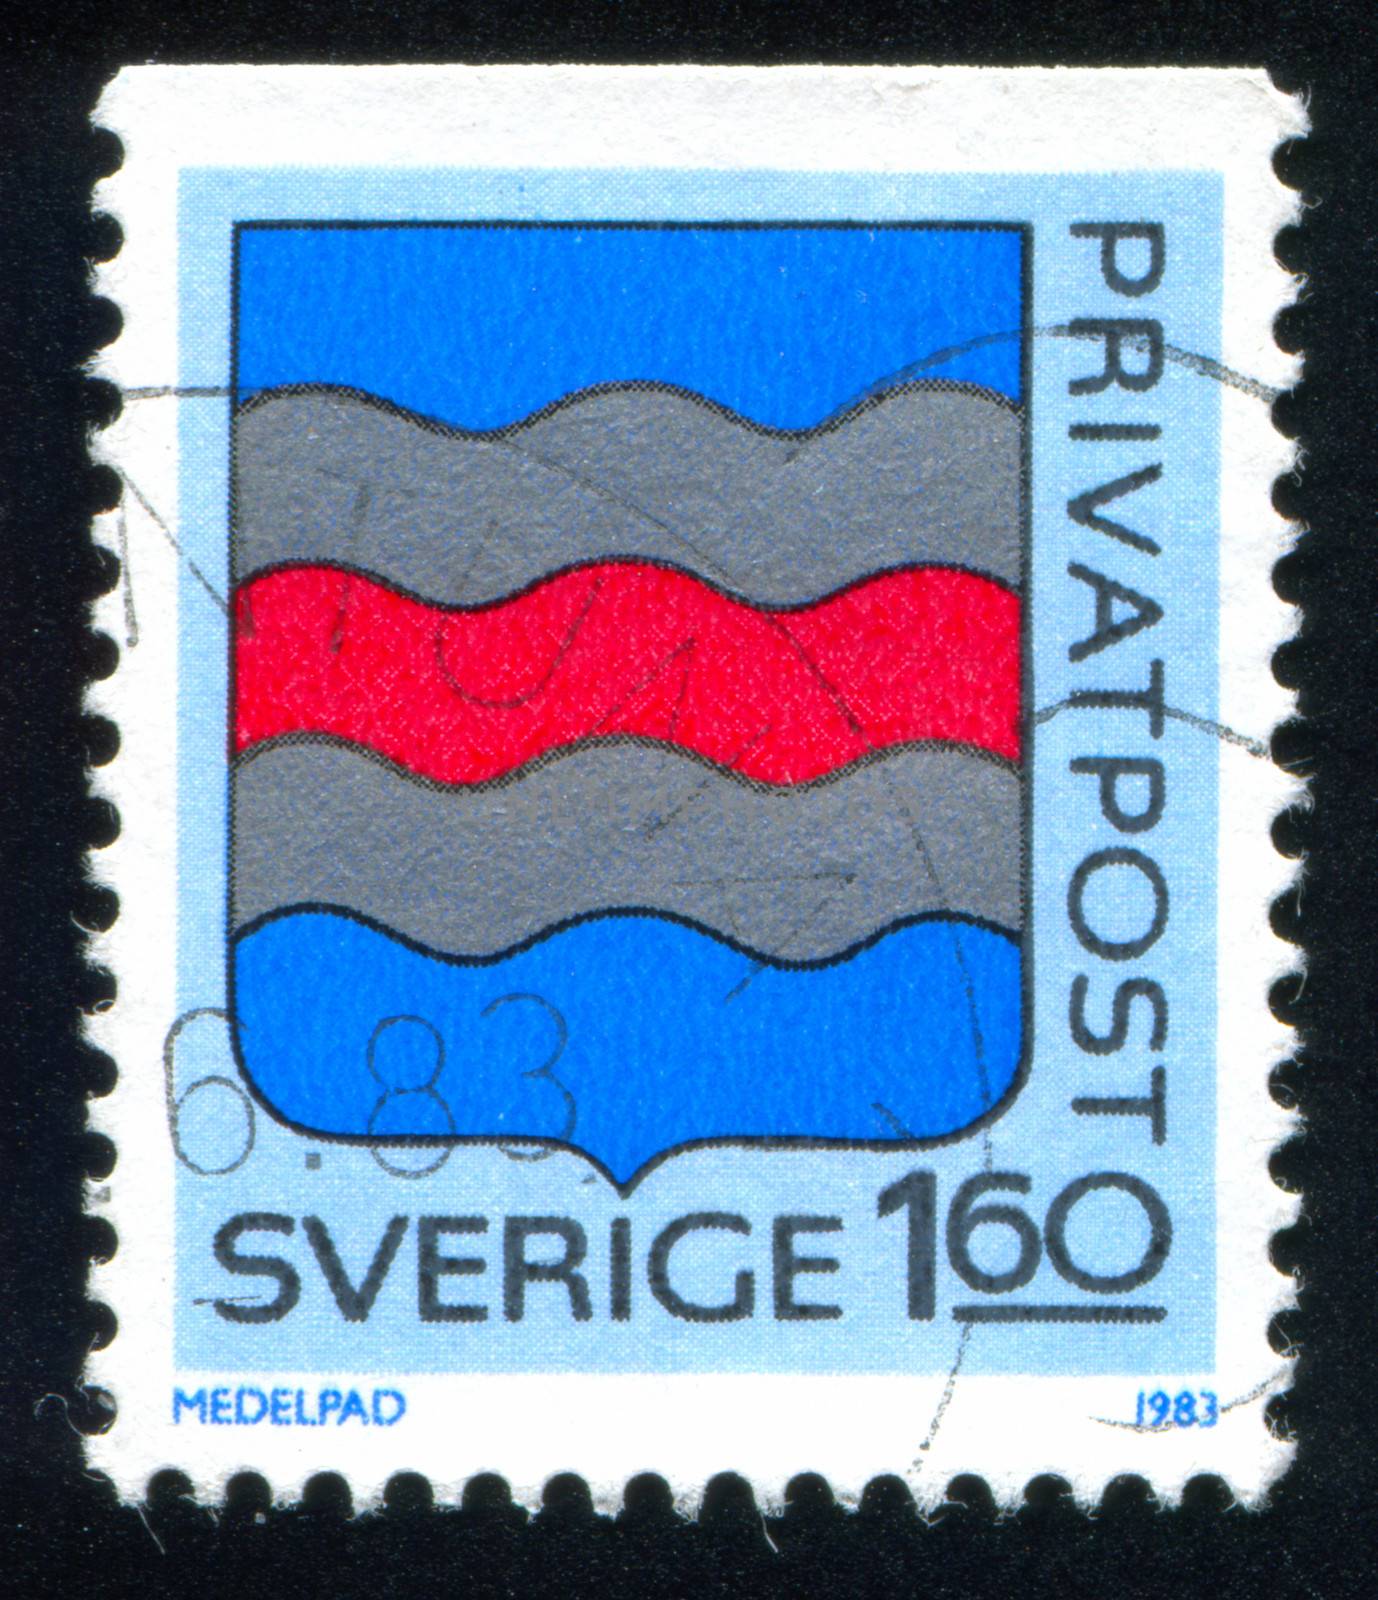 SWEDEN - CIRCA 1983: stamp printed by Sweden, shows Medelpad Arms, circa 1983